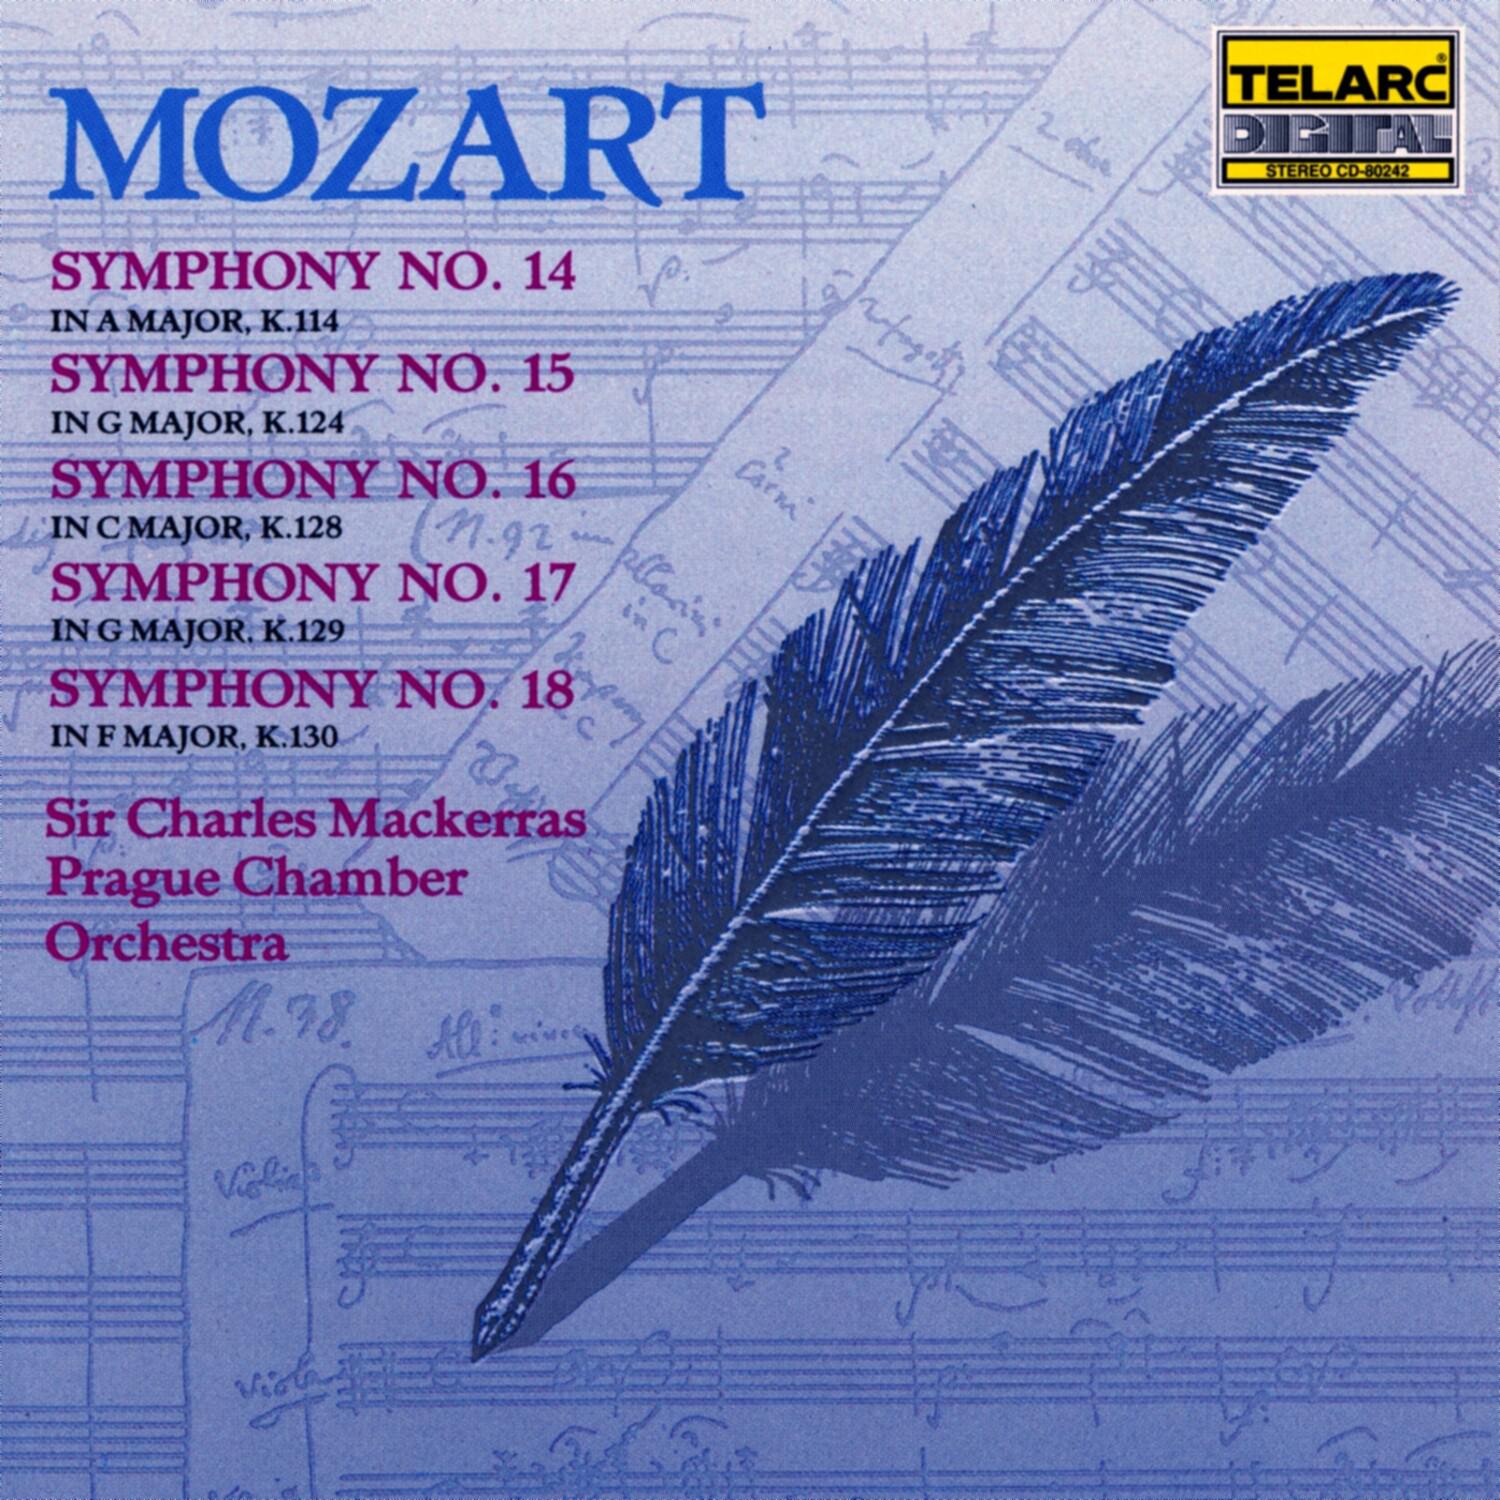 Symphony No. 18 in F major, K.130: IV. Molto allegro